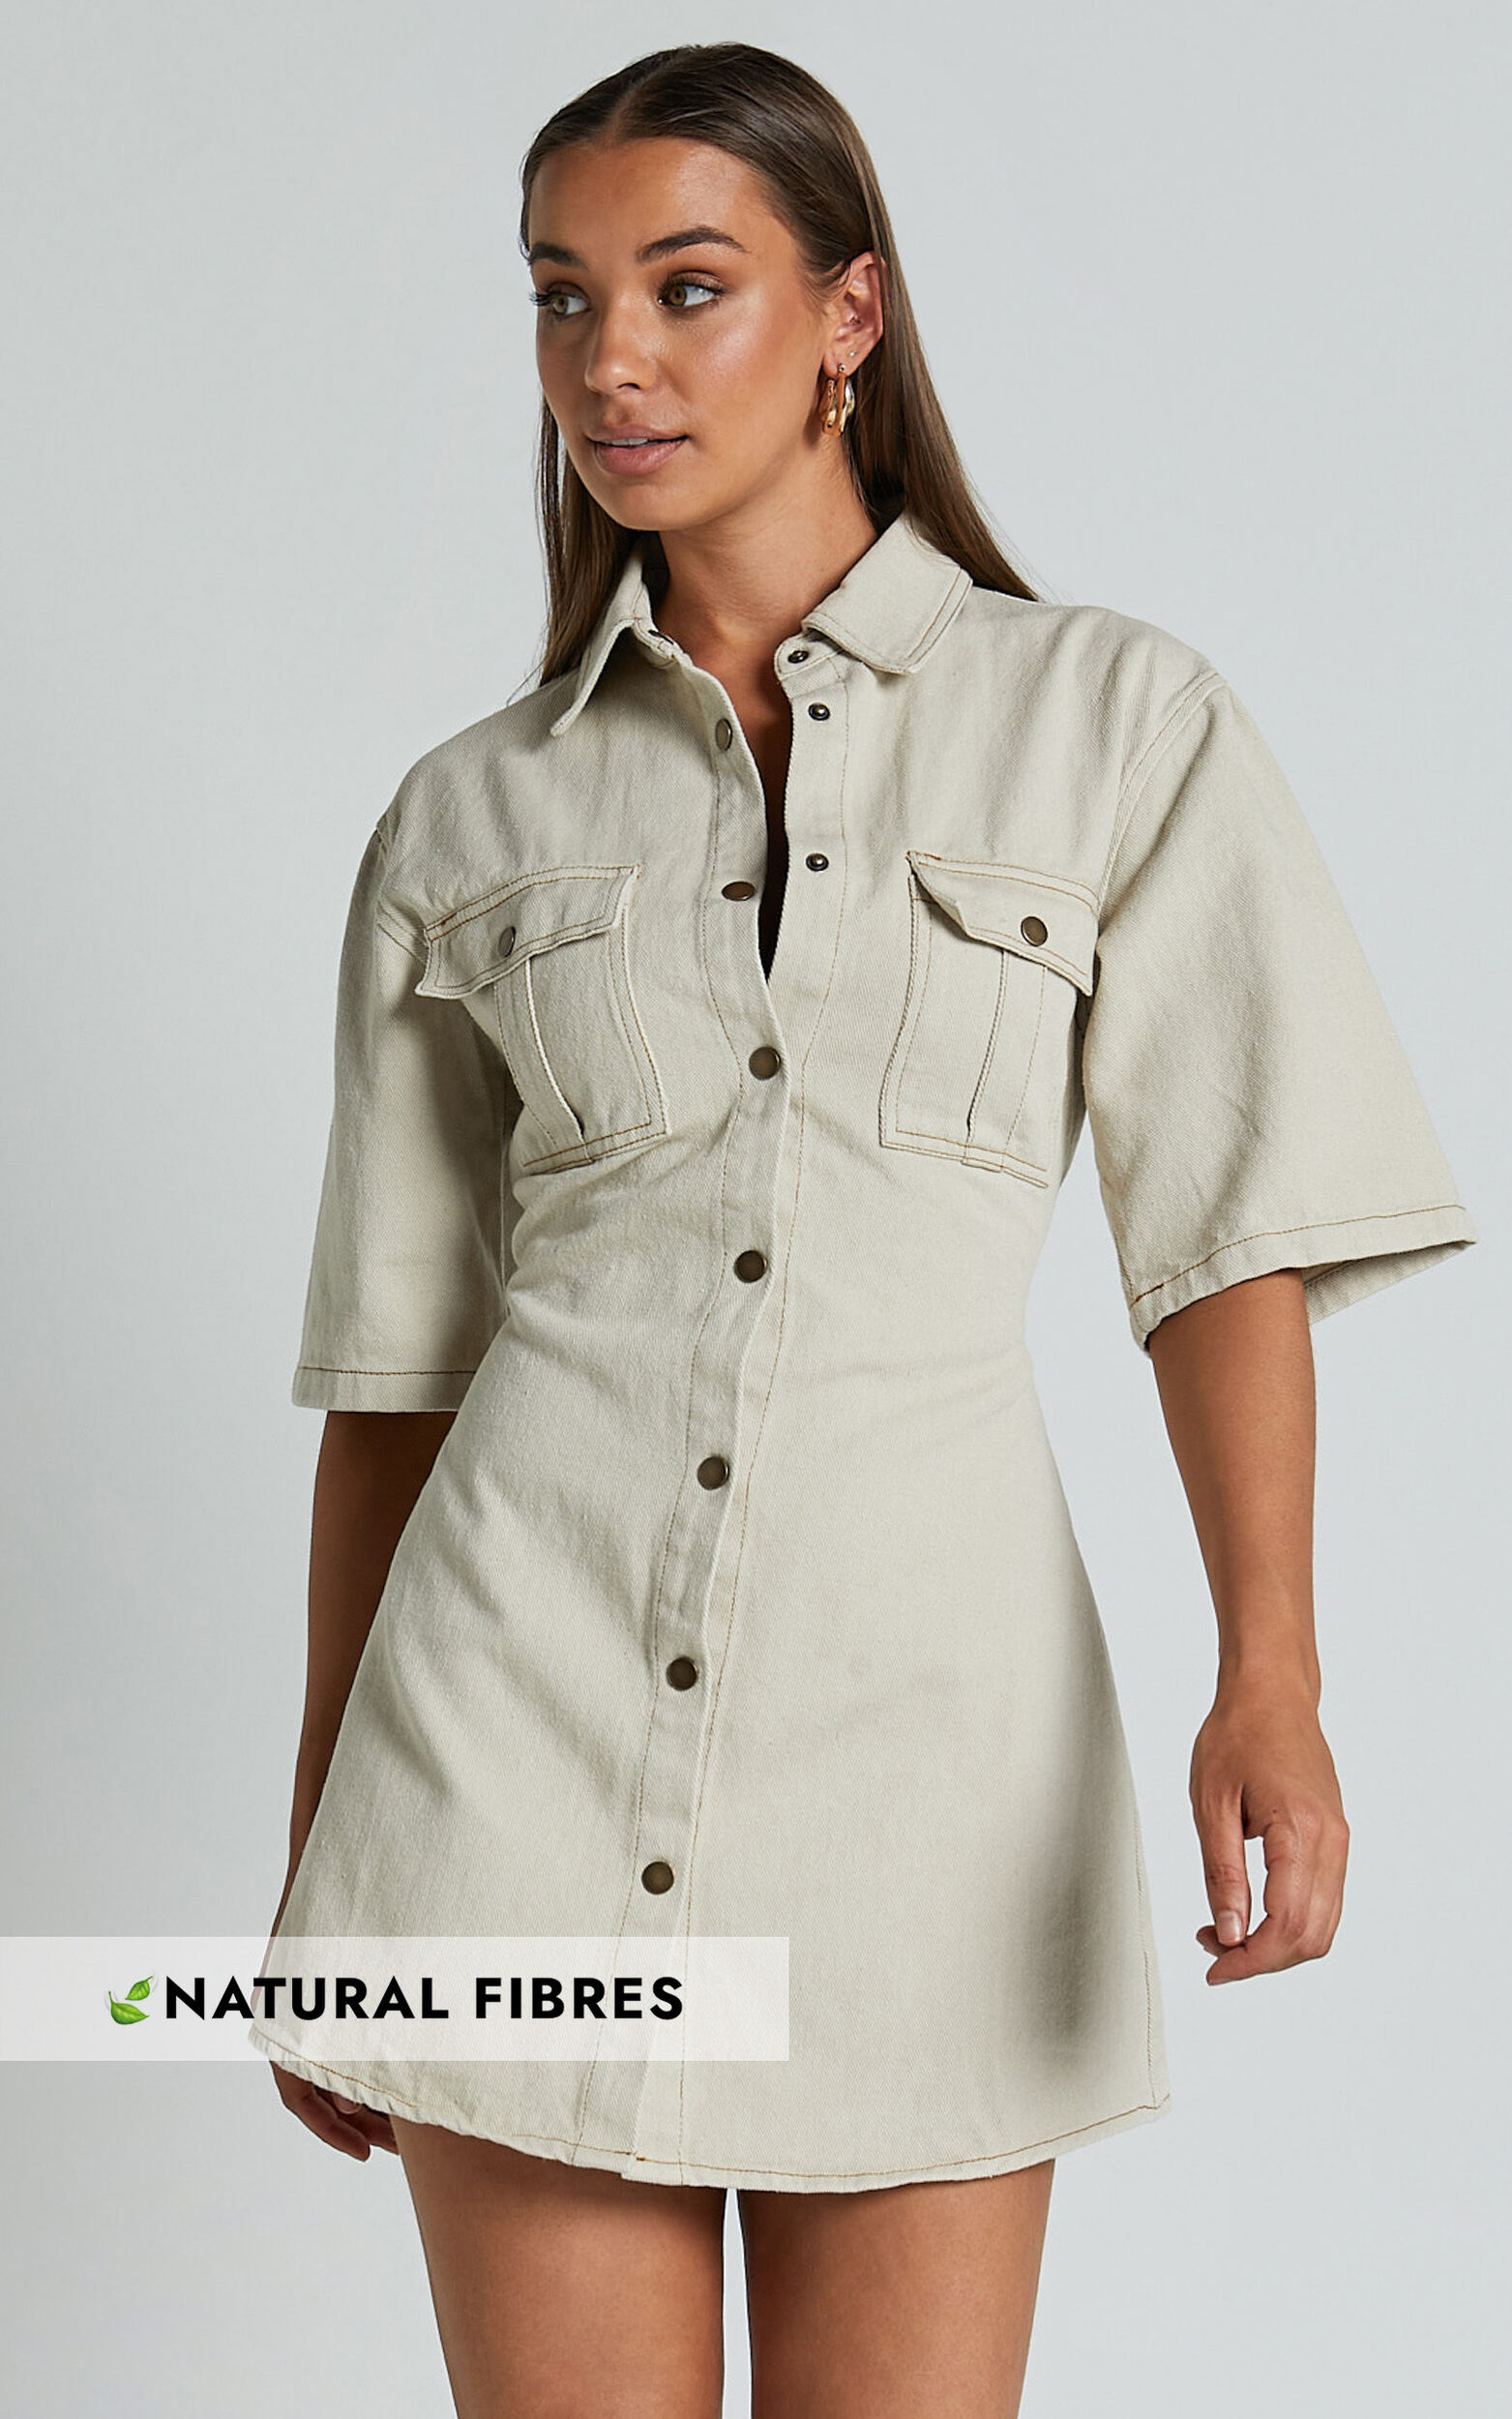 Leilani Mini Dress - Denim Short Sleeve Button Up Dress in Natural - 06, NEU1